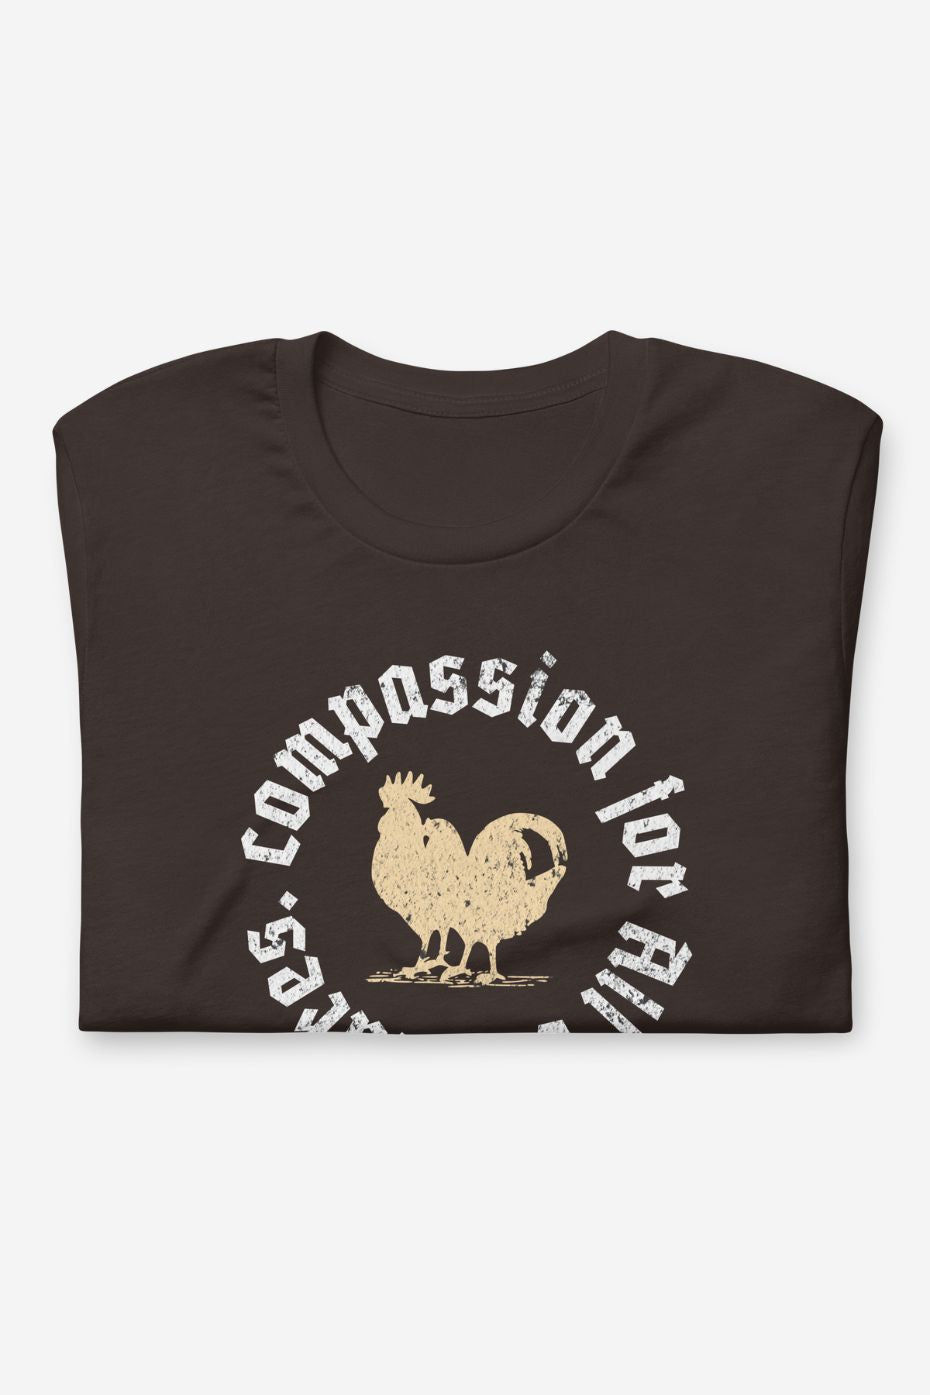 Compassion For All Creatures - Unisex vegan t-shirt